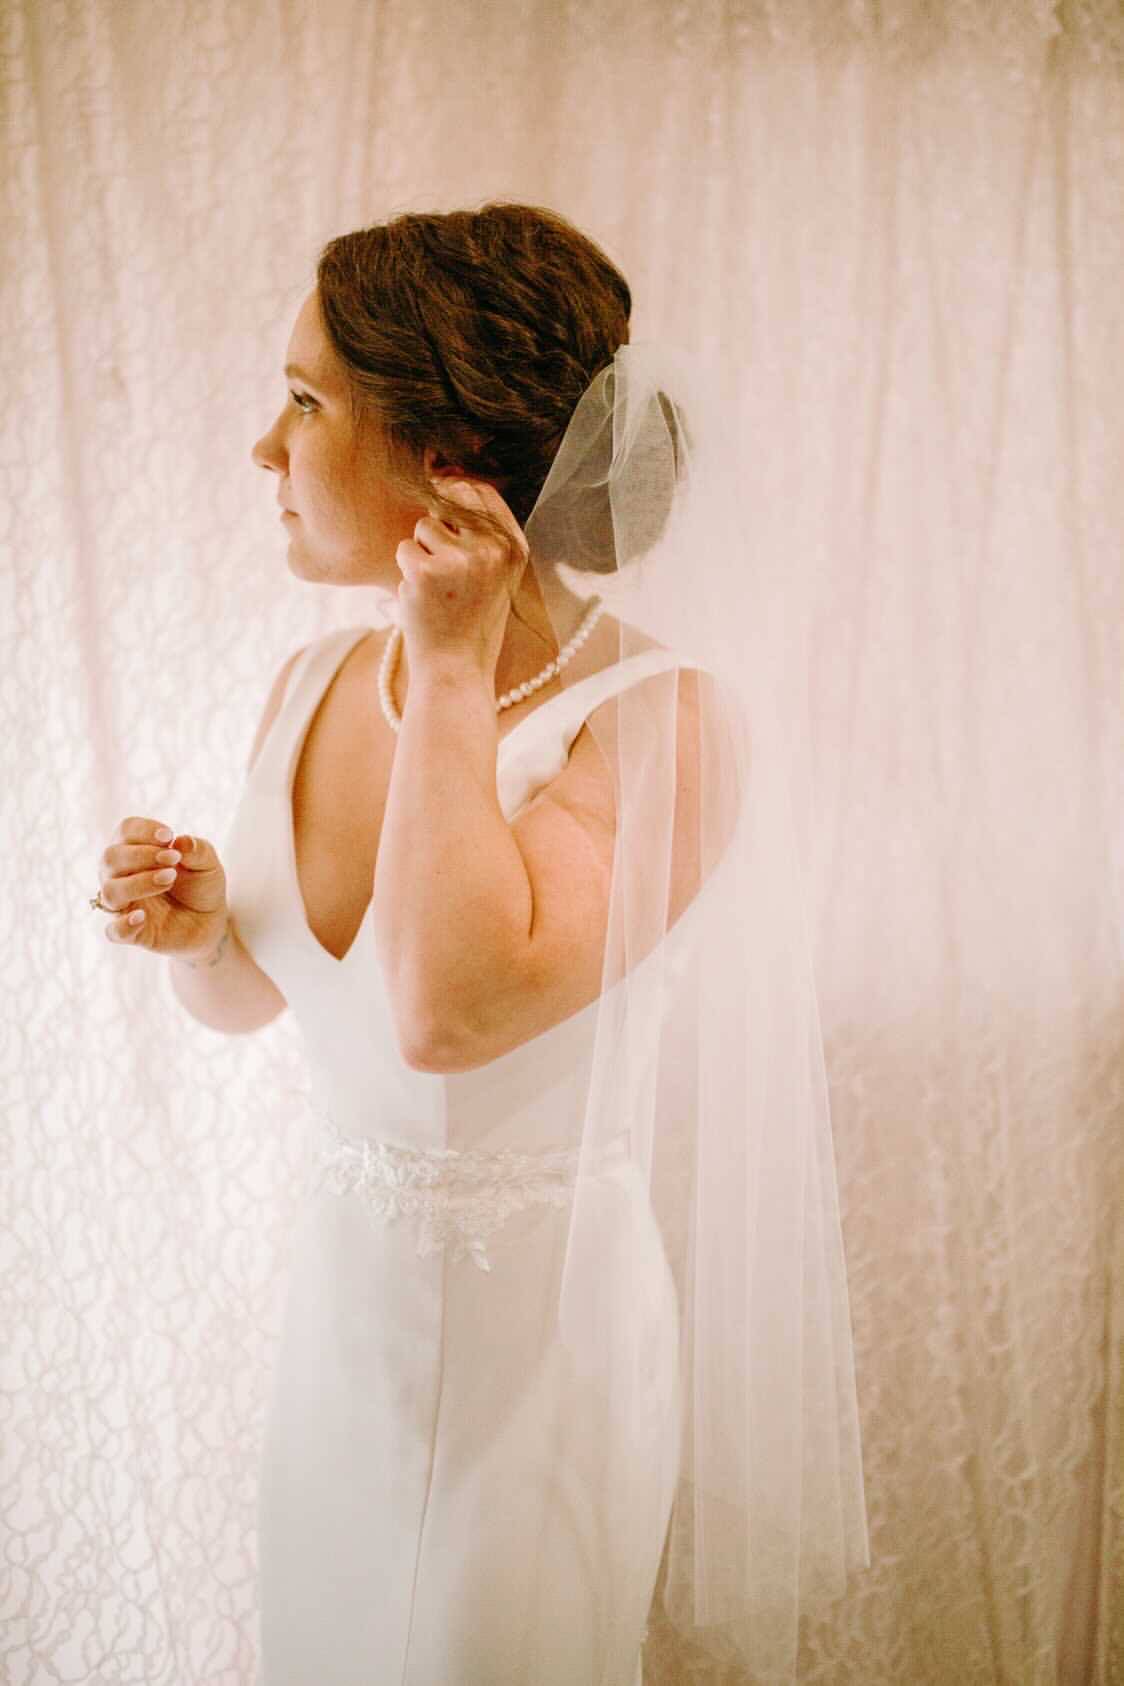 Casdre Wedding Veil 1 Tier Waist Fingertip Length Bridal Tulle Veils Cut Edge Veil with Comb for Brides (A White)